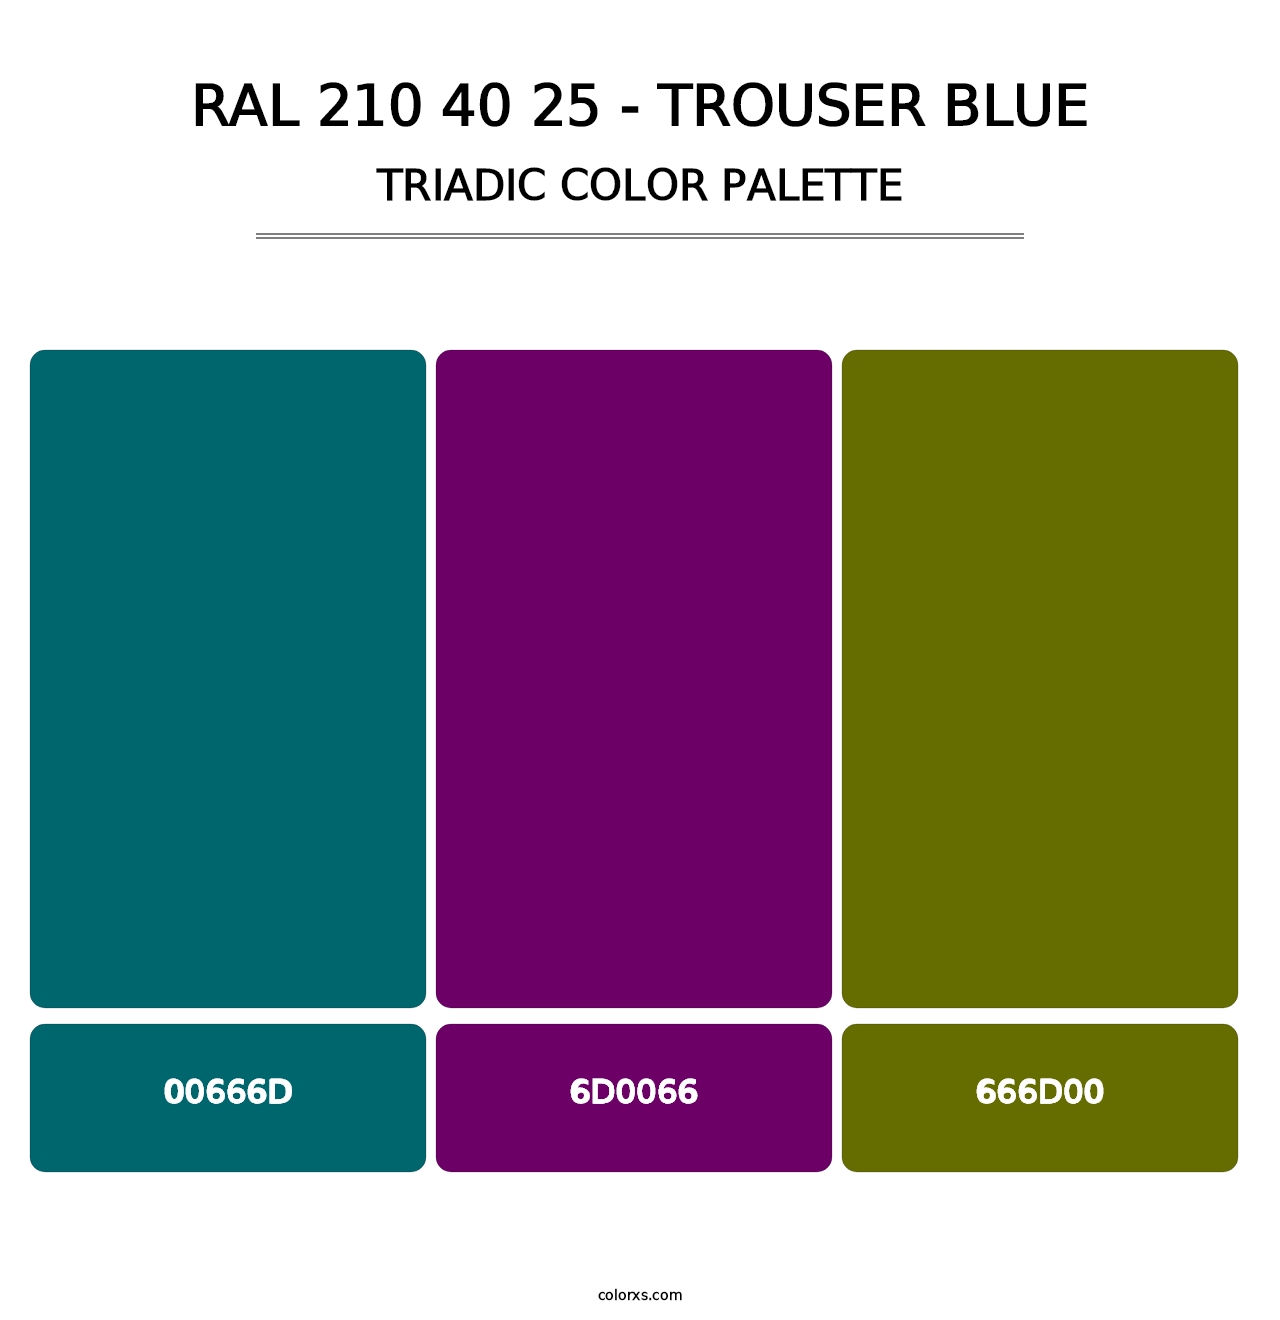 RAL 210 40 25 - Trouser Blue - Triadic Color Palette